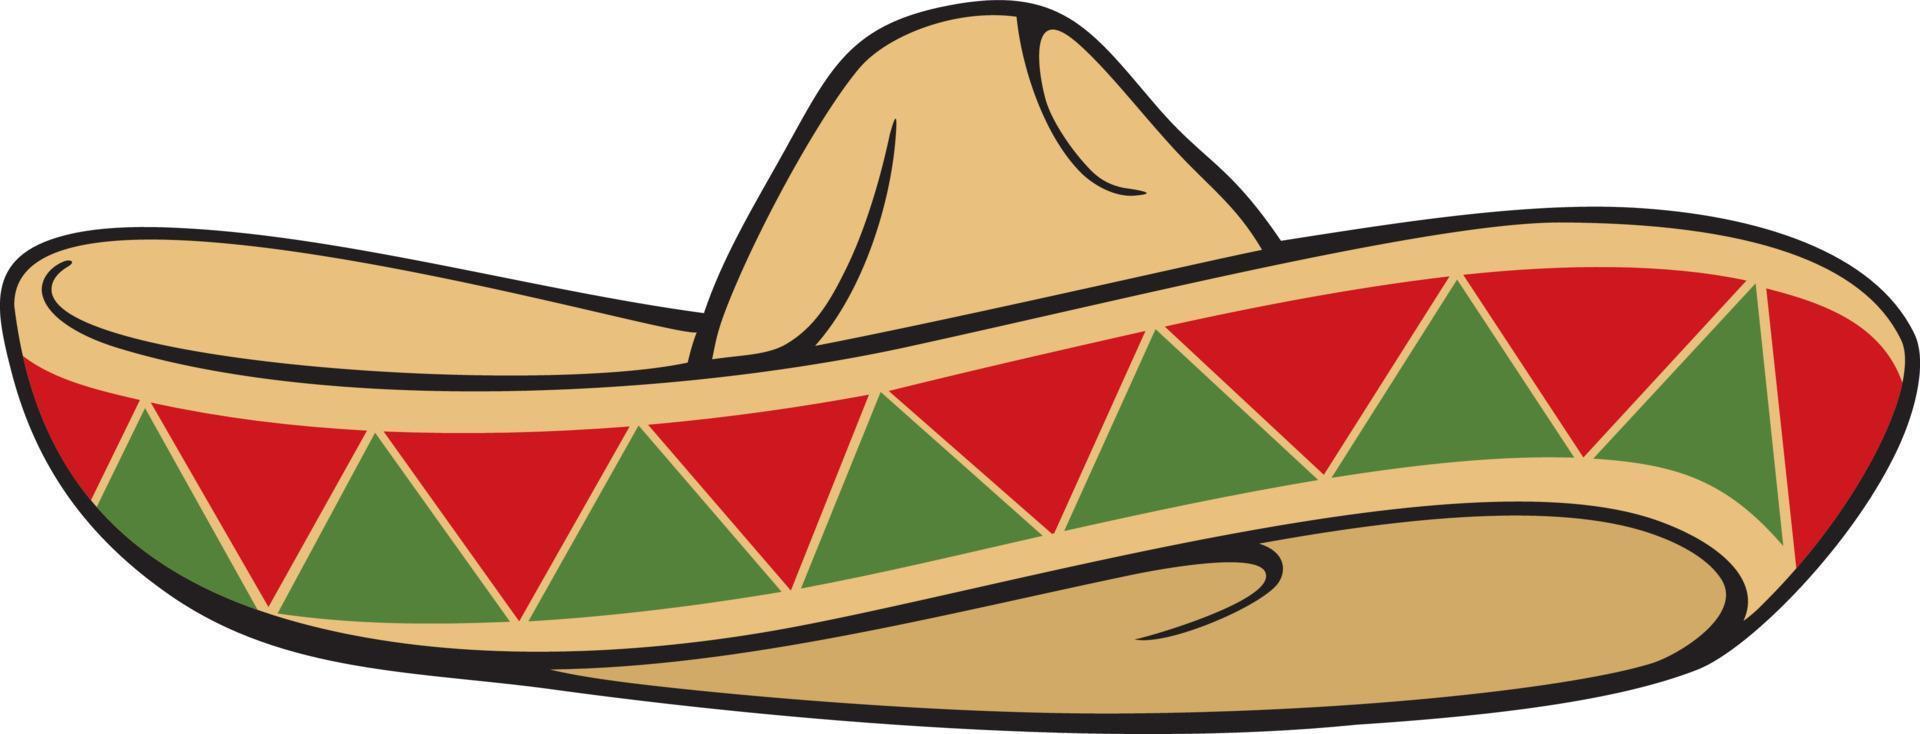 Sombrero - mexikanische Hutfarbe. Vektor-Illustration. vektor